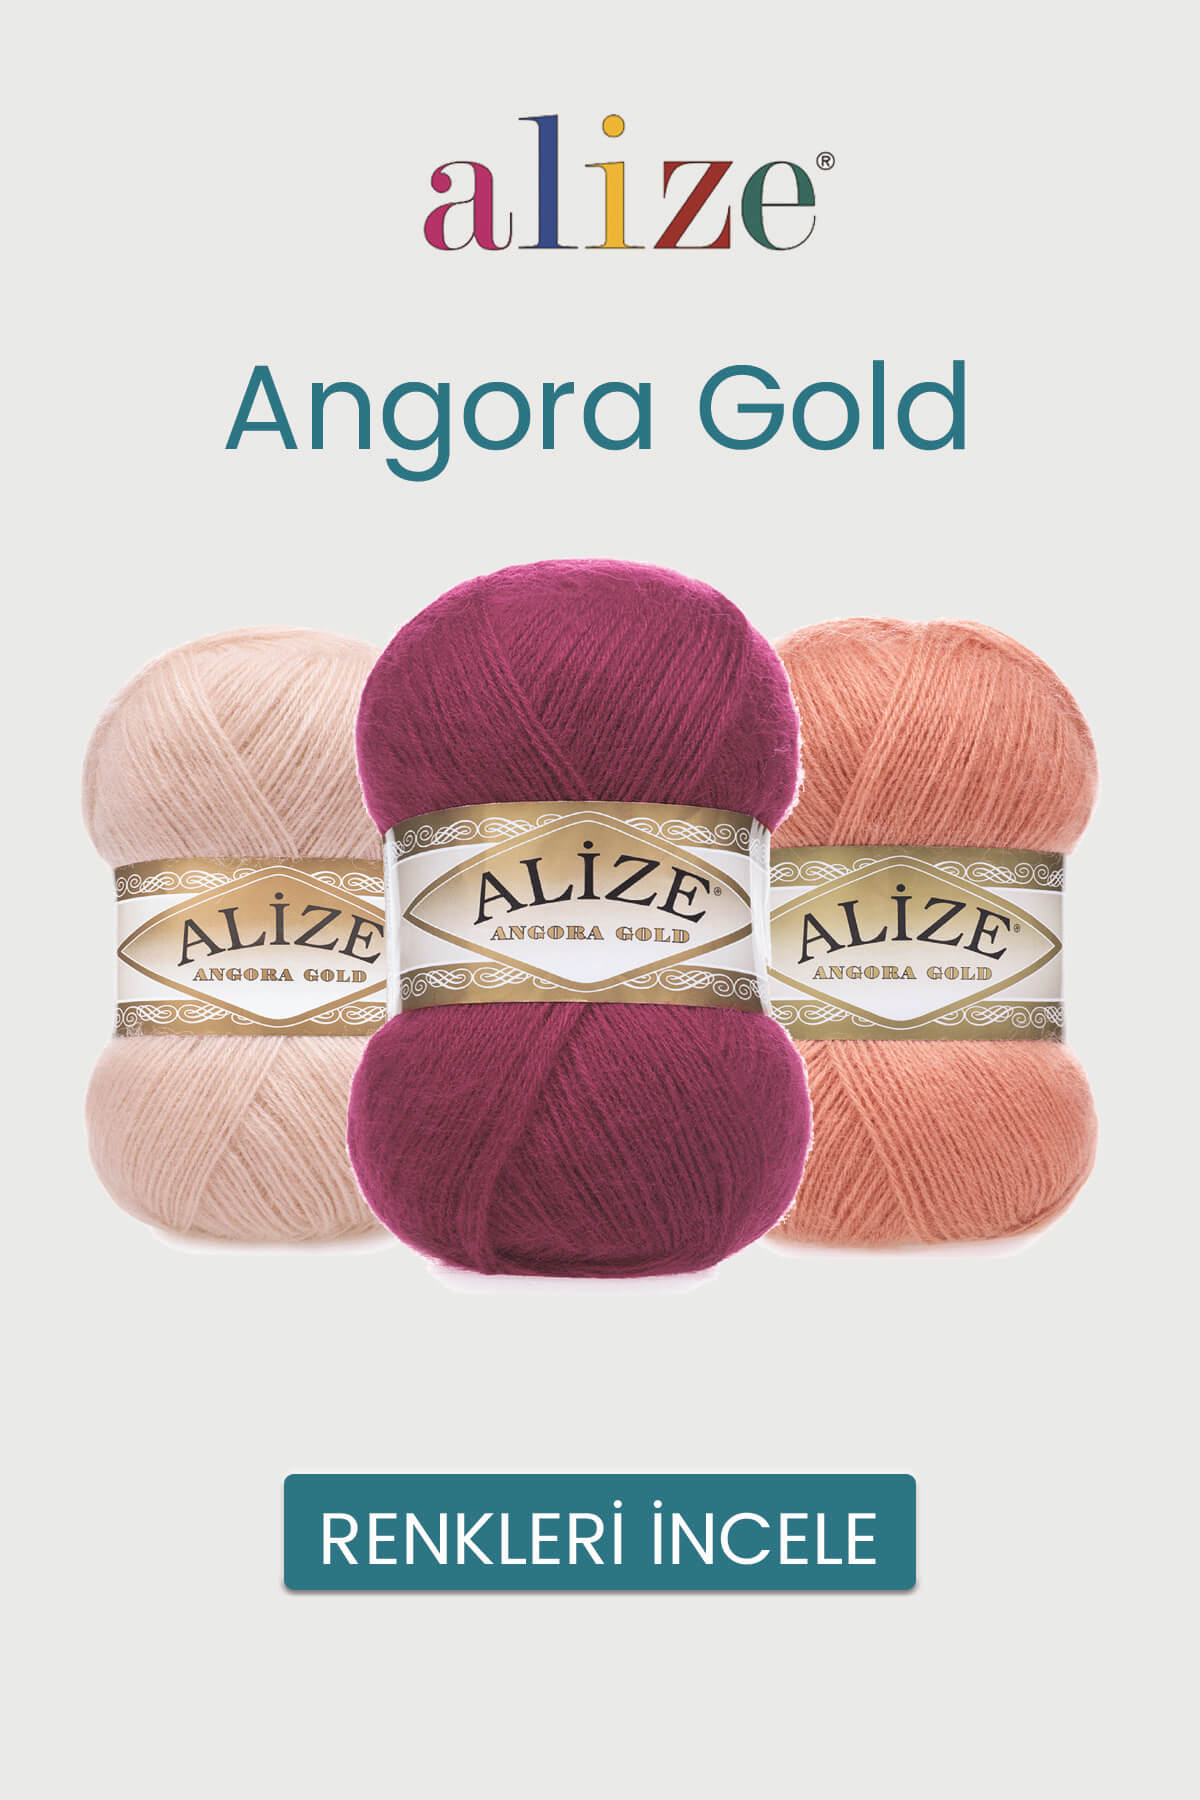 alize-angora-gold-tekstilland